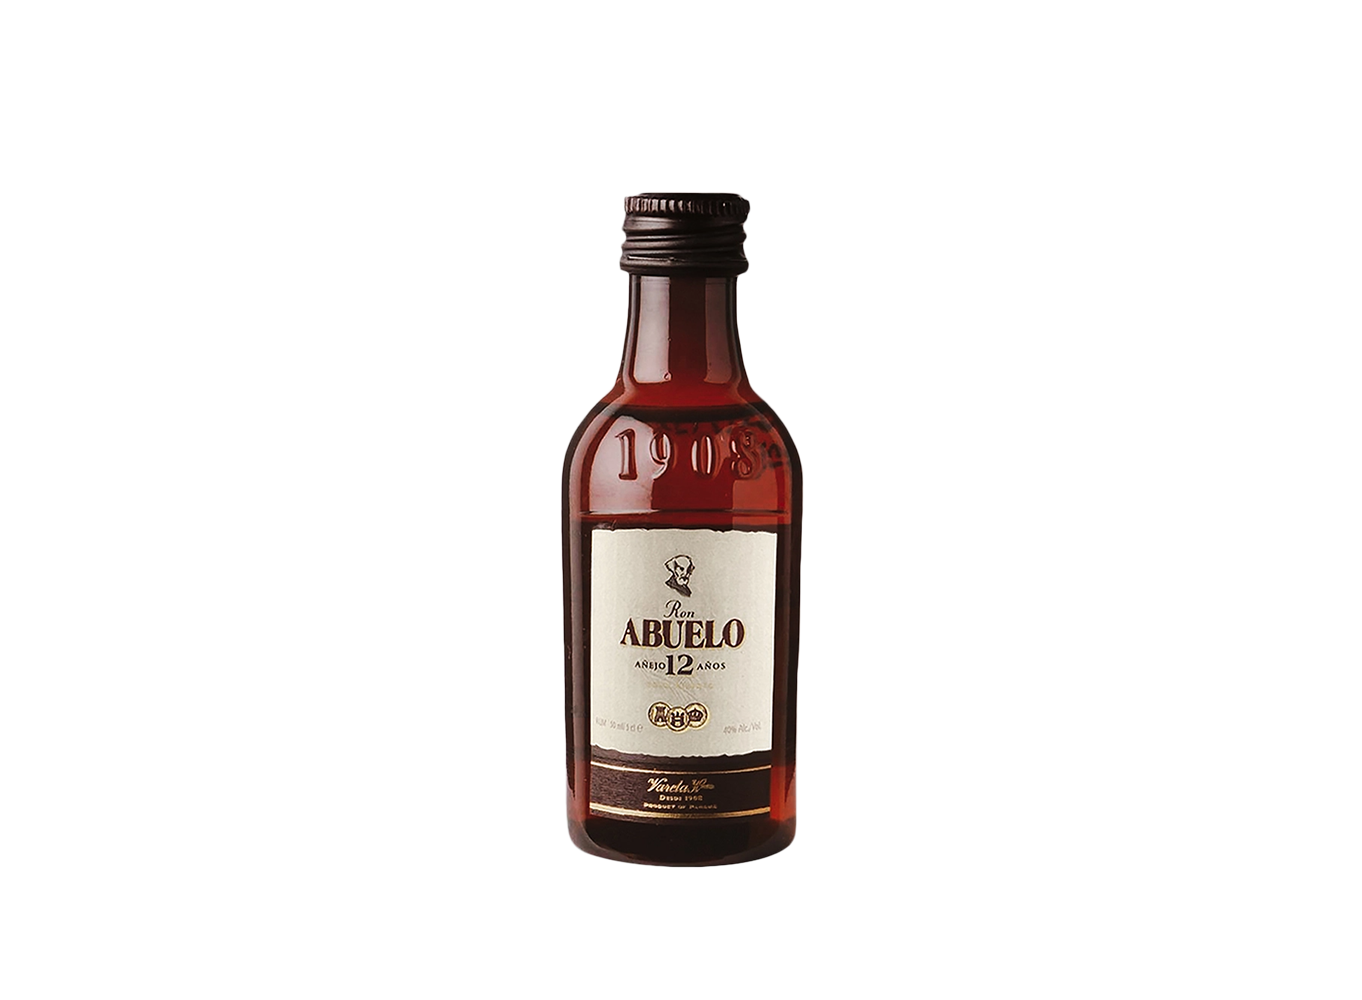 Pack botellitas mini botellas miniaturas de whisky de mejores marcas